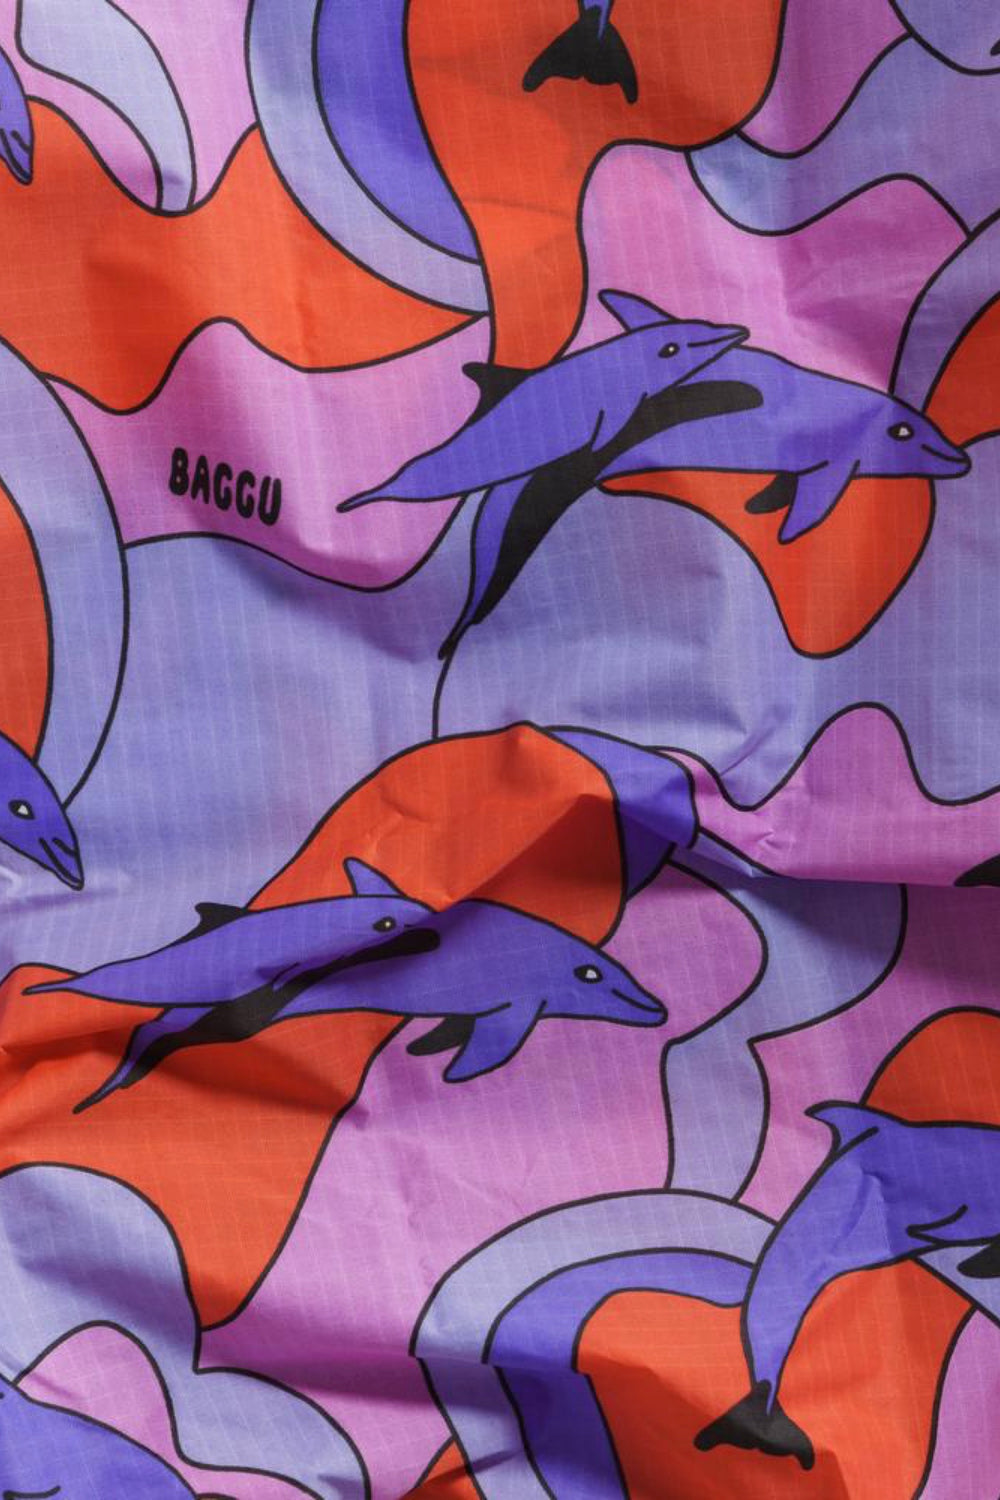 Dolphins Baggu